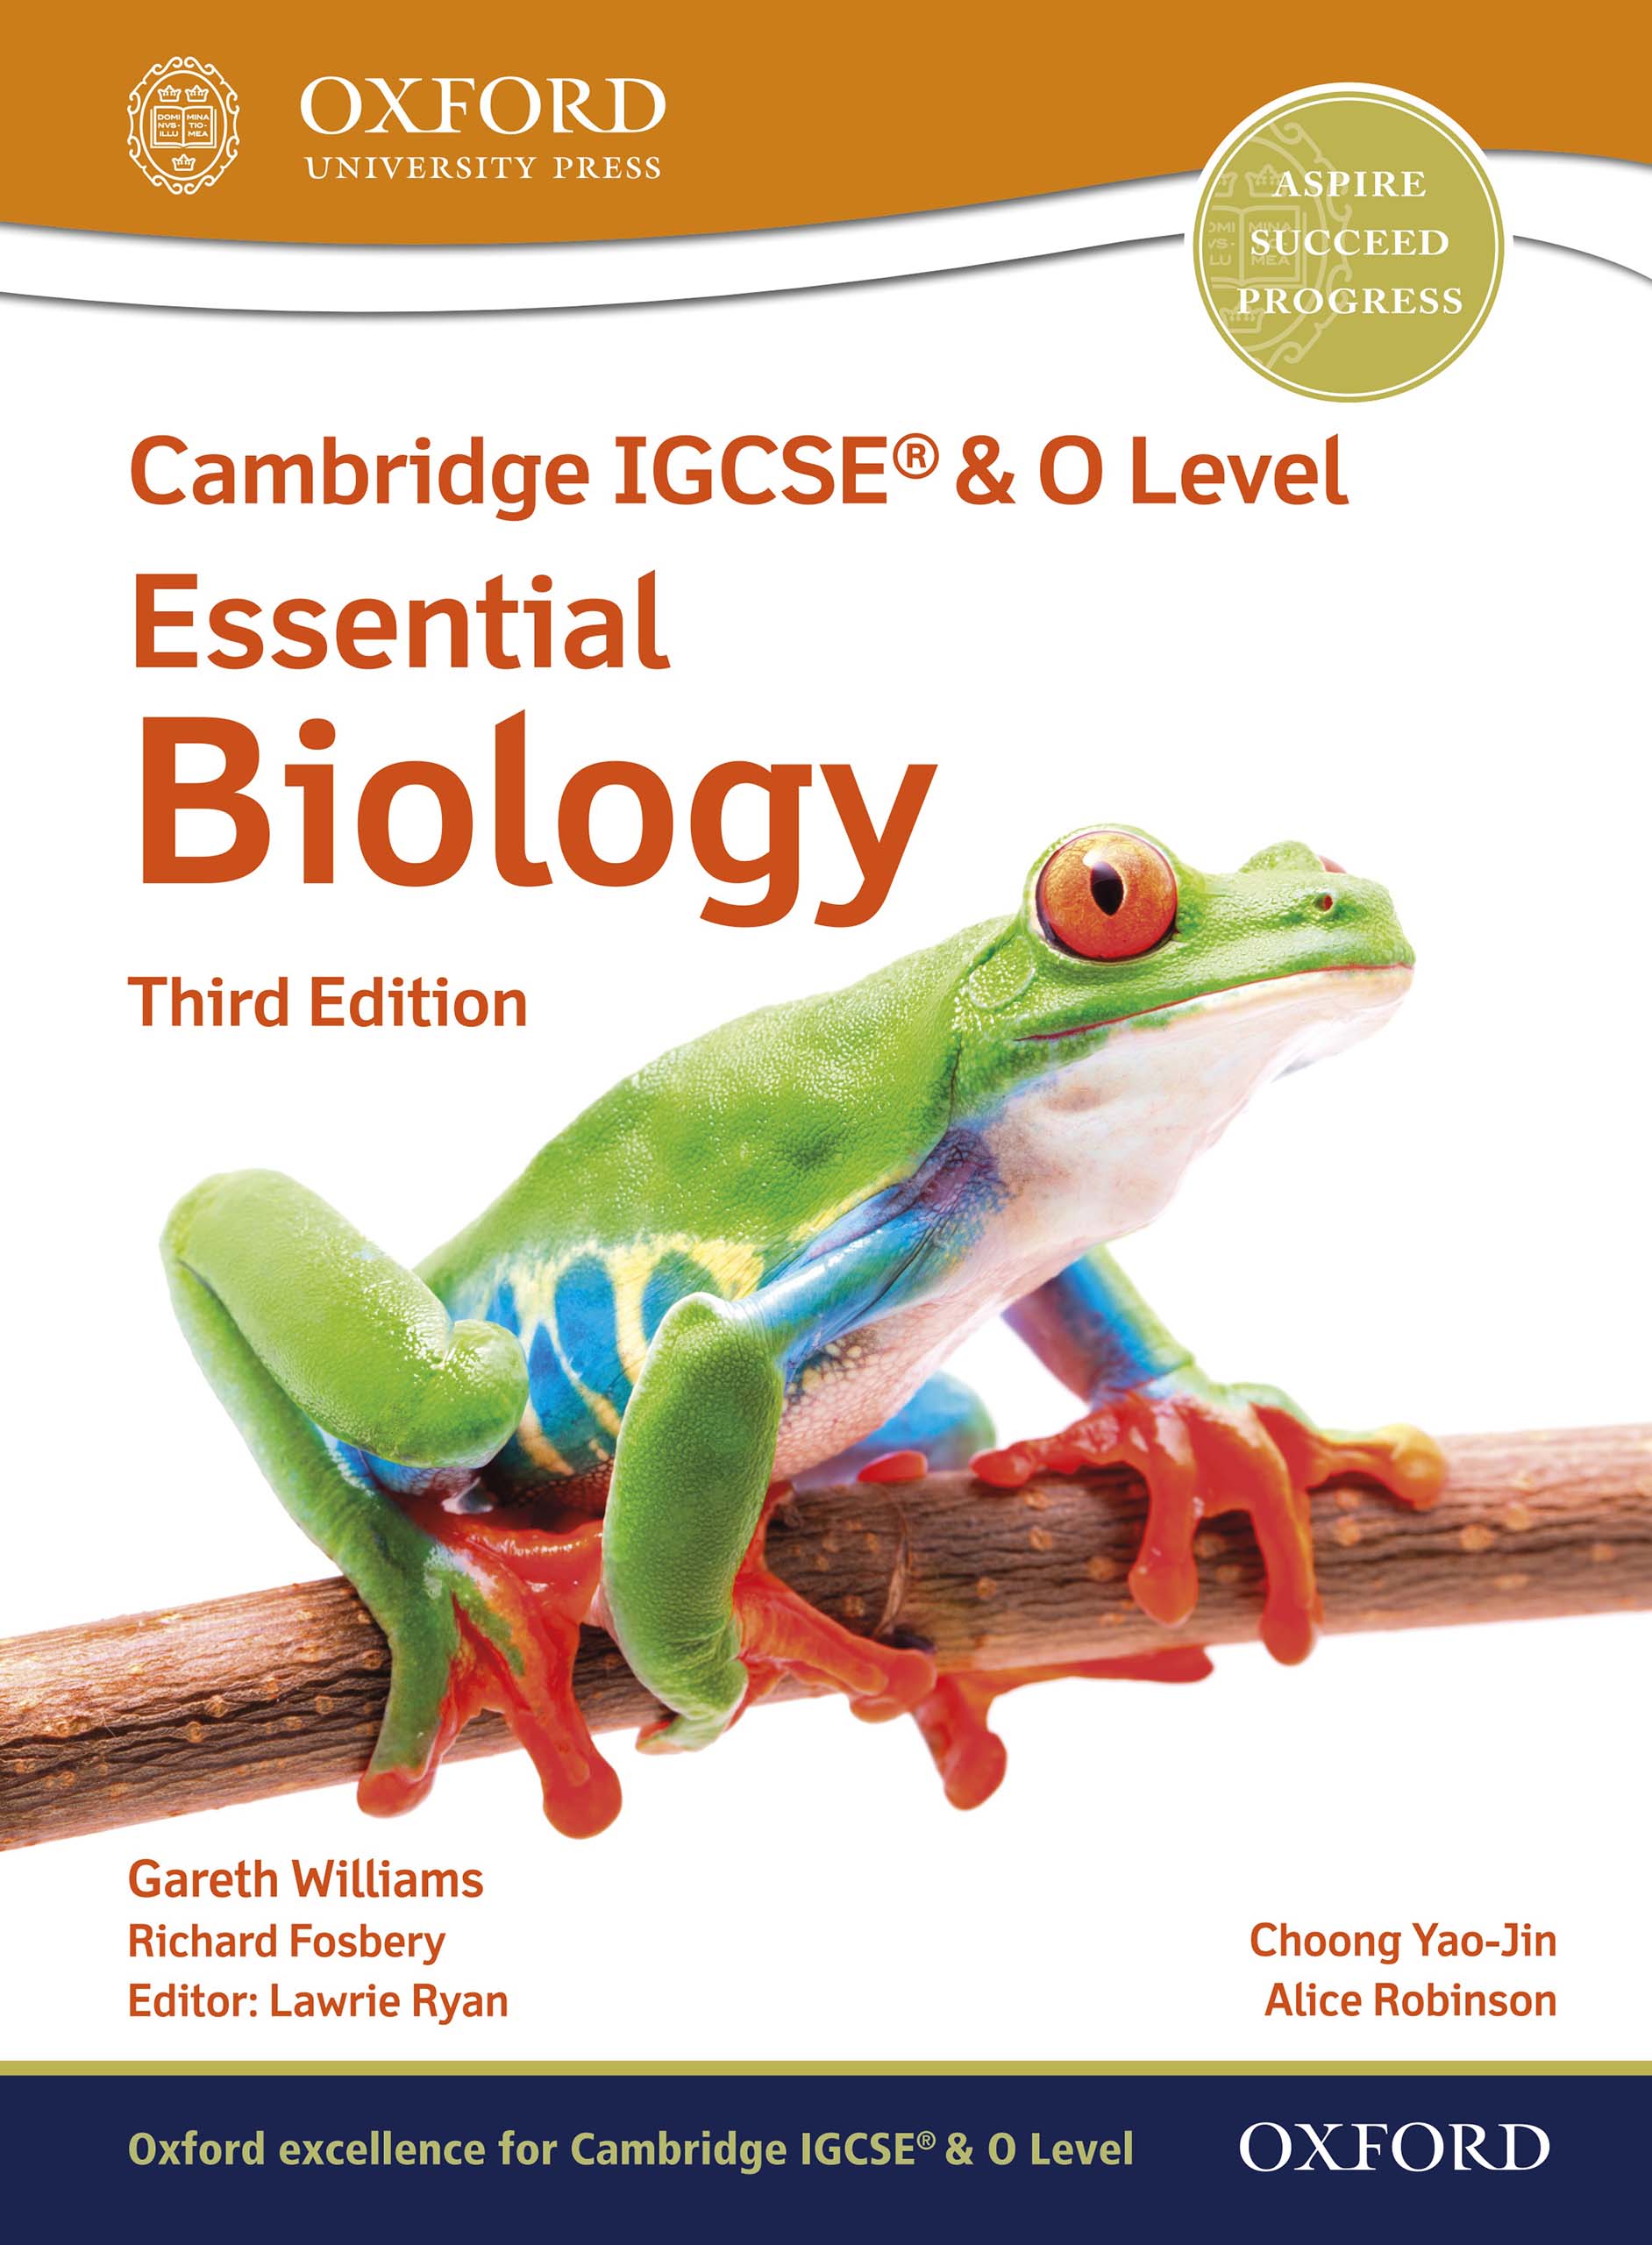 pdf-ebook-oxford-cambridge-igcse-and-o-level-essential-biology